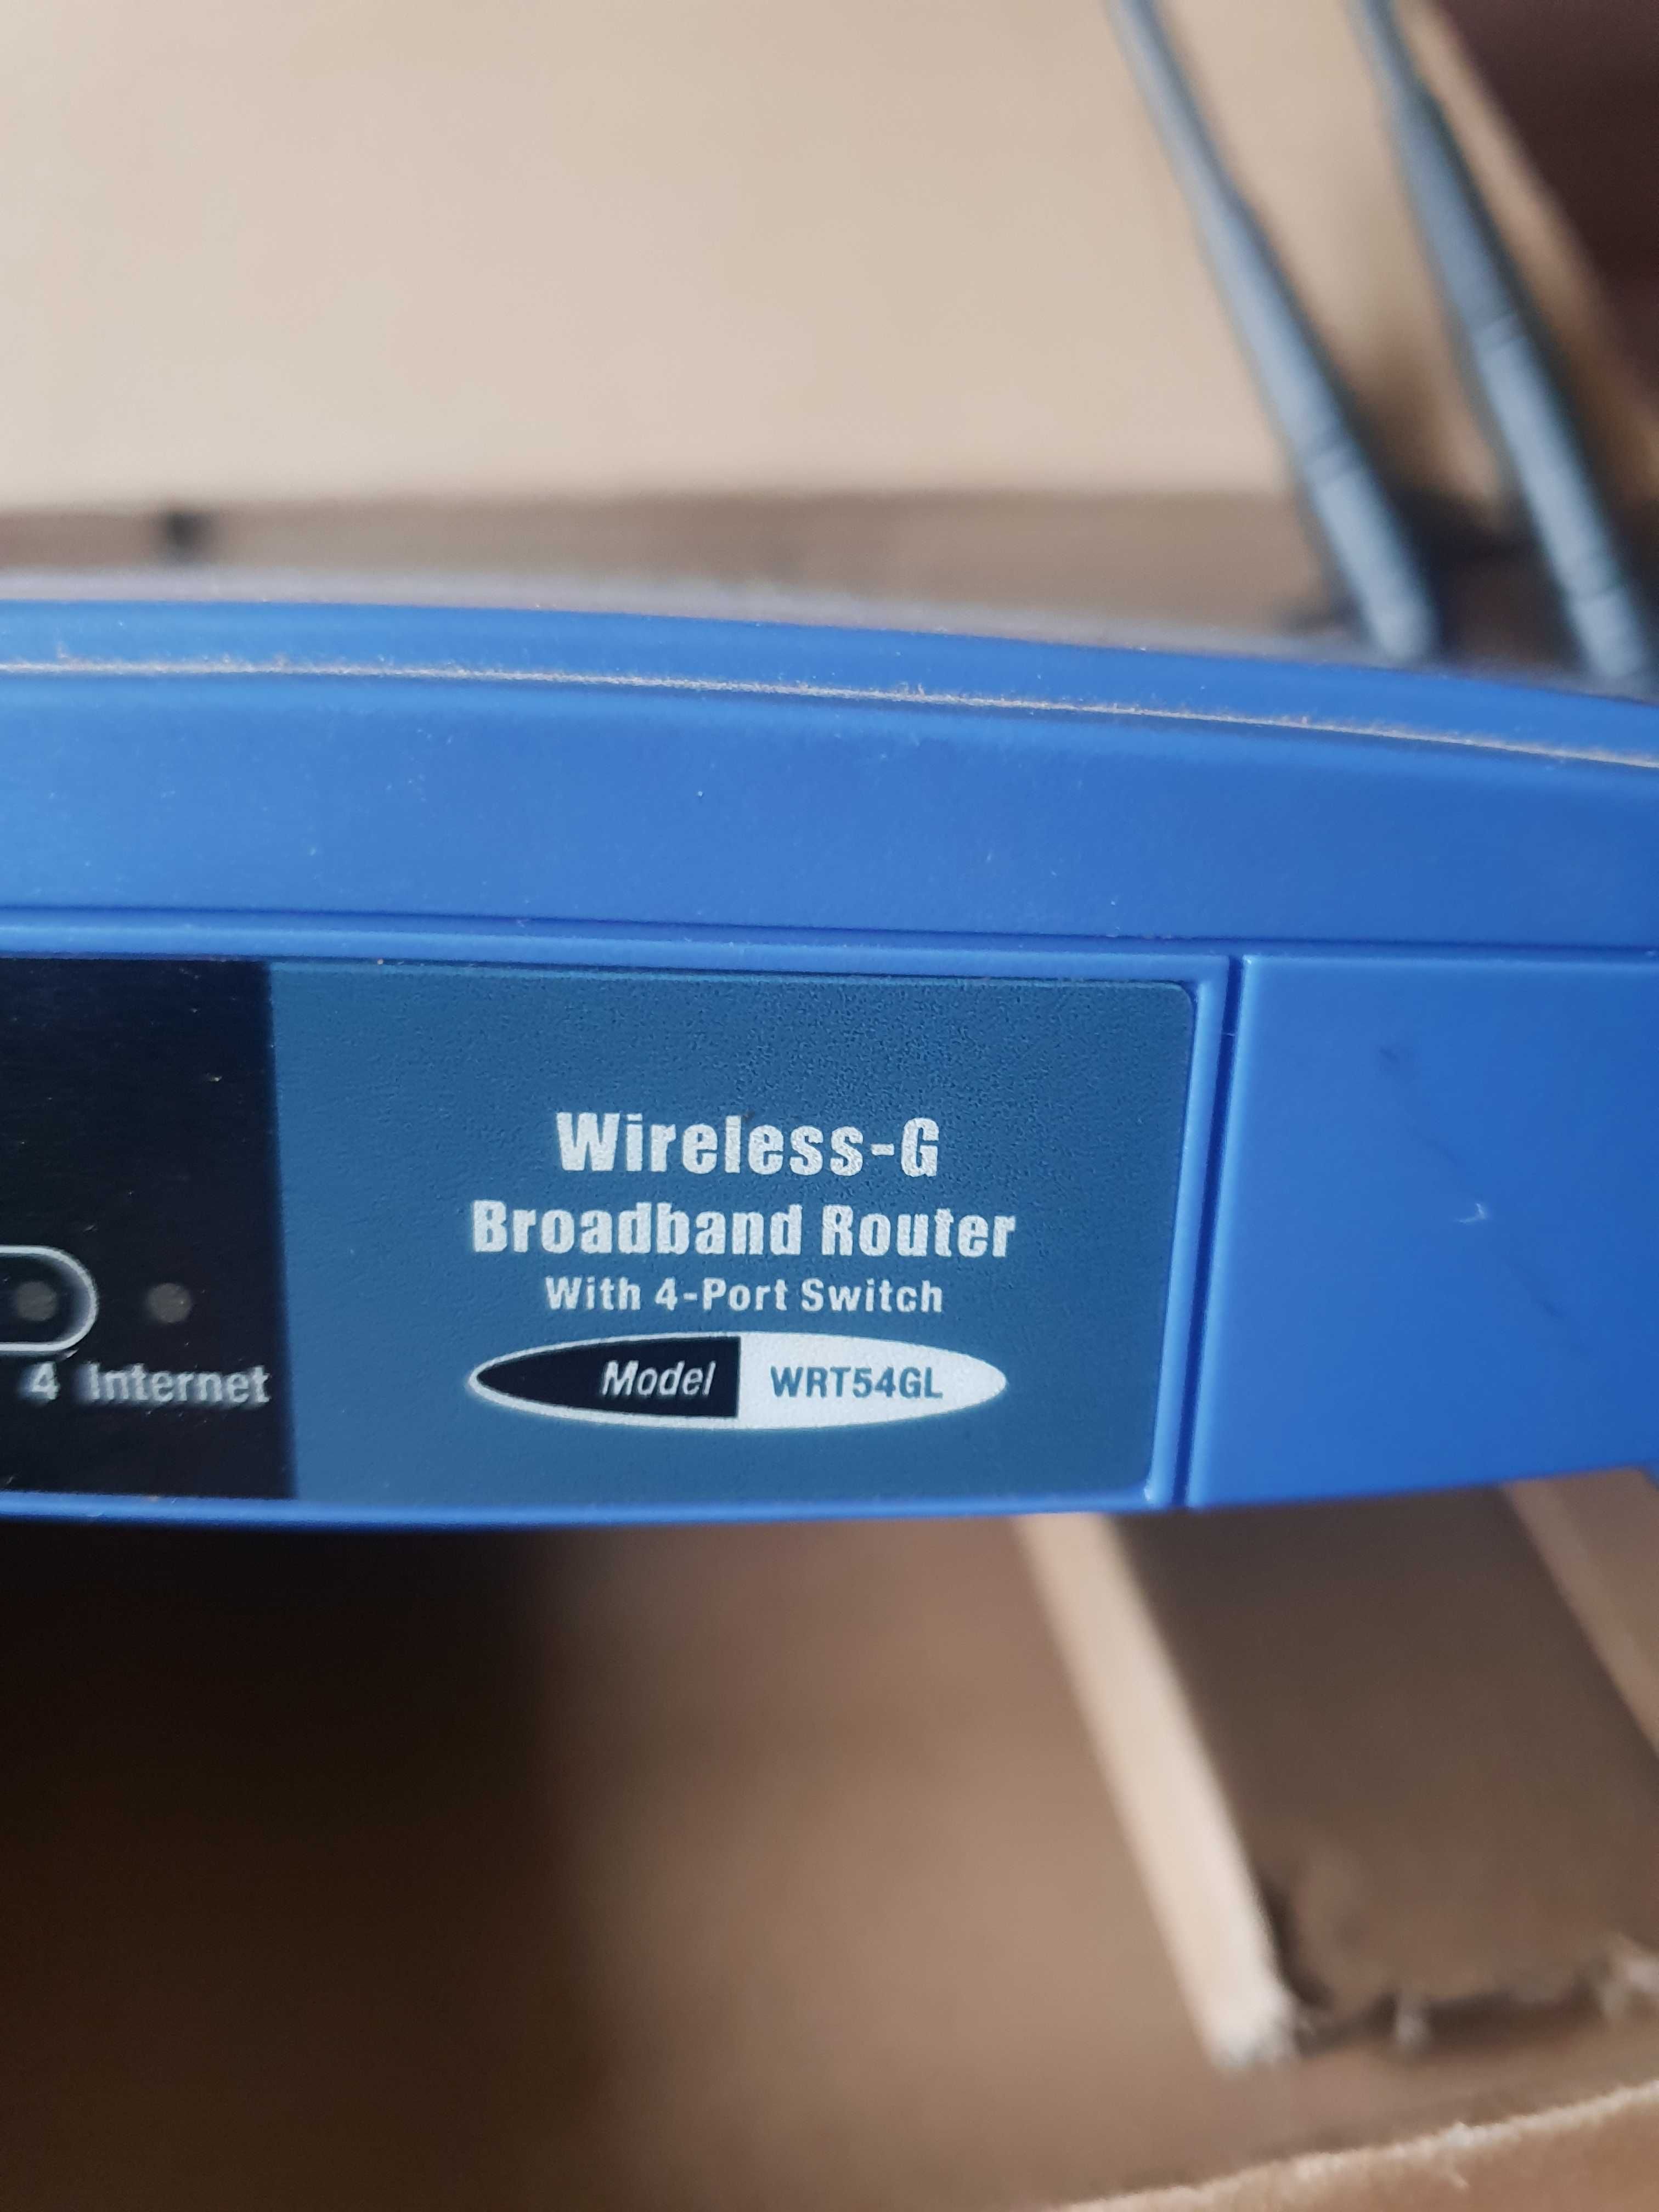 wireless-g broadband router WRT54GL